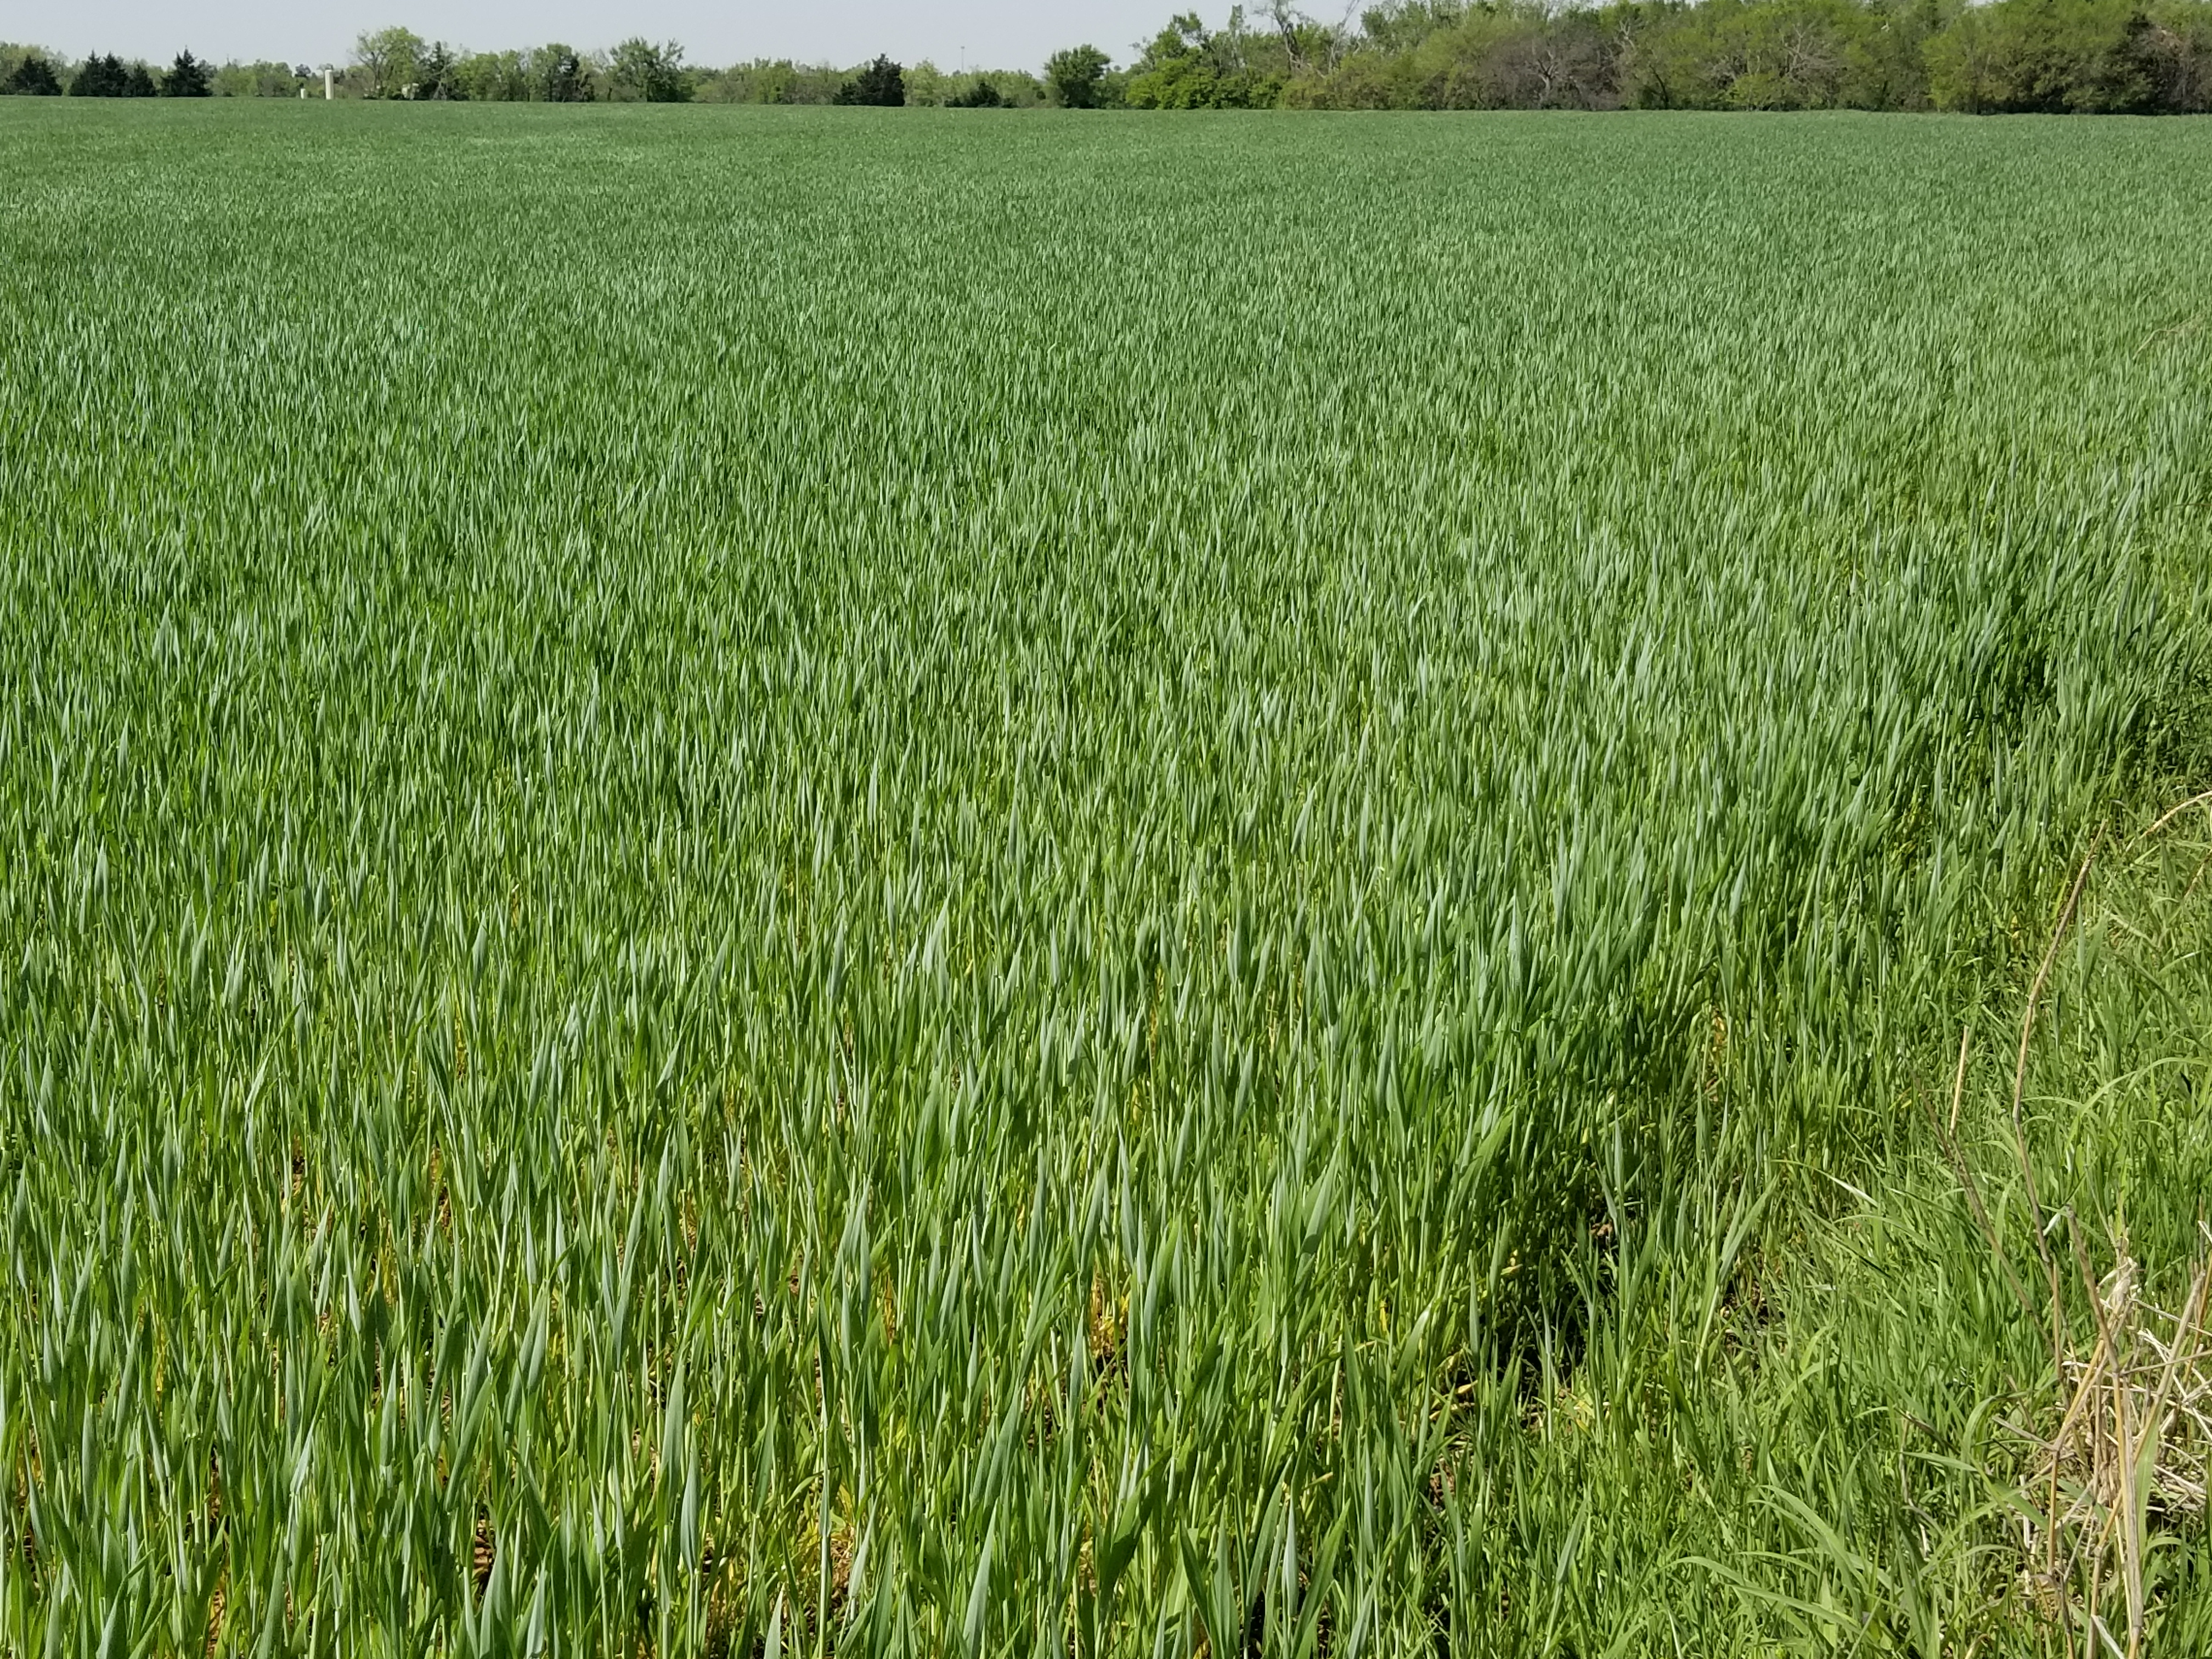 U.S. Wheat Crop Slightly Behind Normal Progress And Oklahoma Has The Top Crop According to latest USDA Crop Progress Report